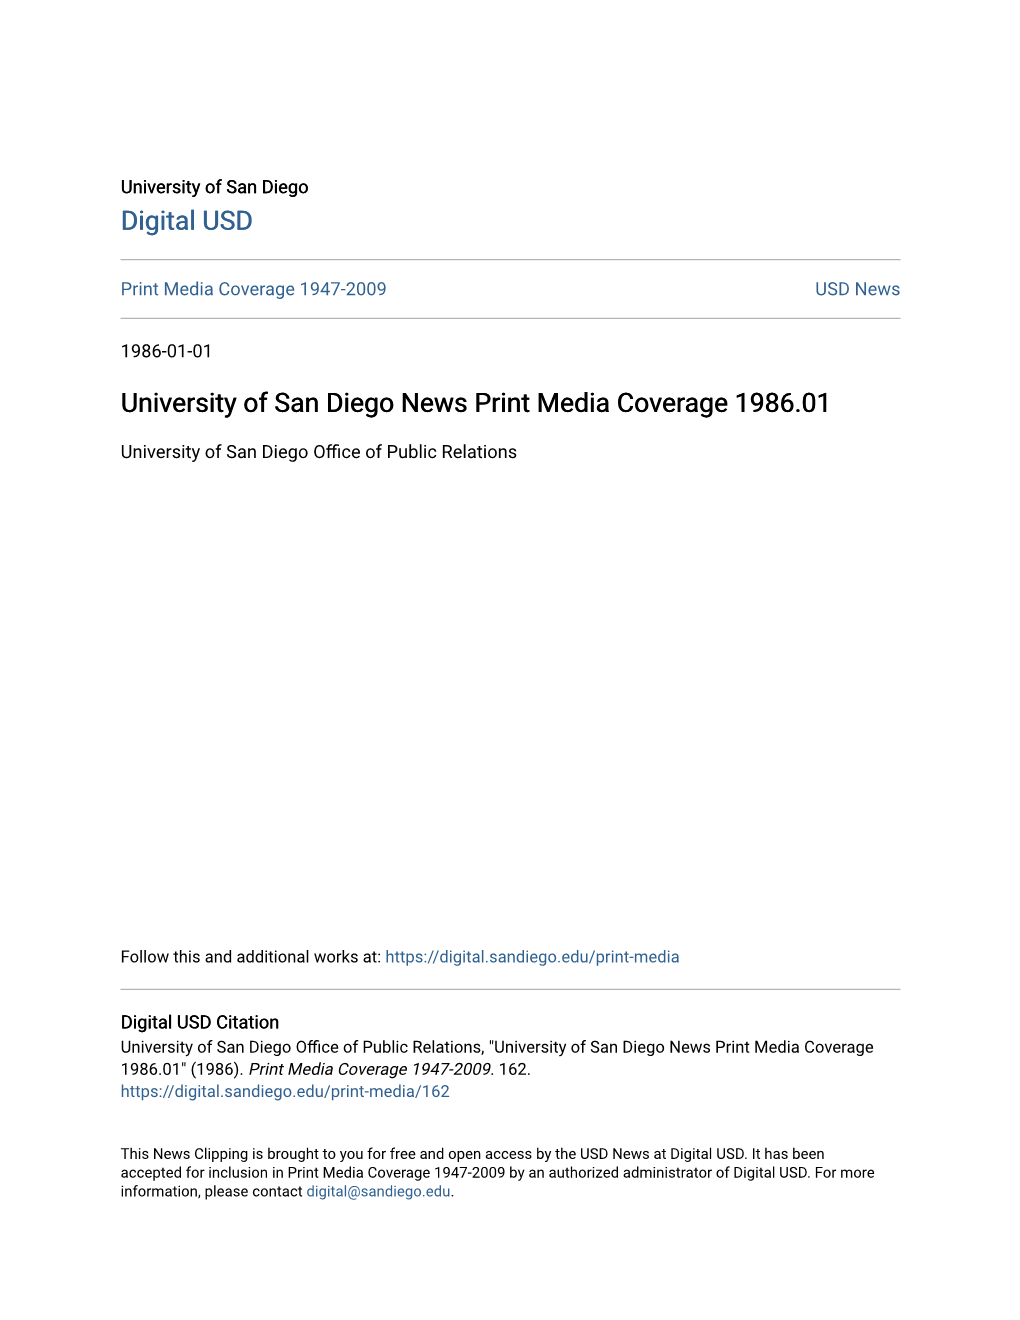 University of San Diego News Print Media Coverage 1986.01